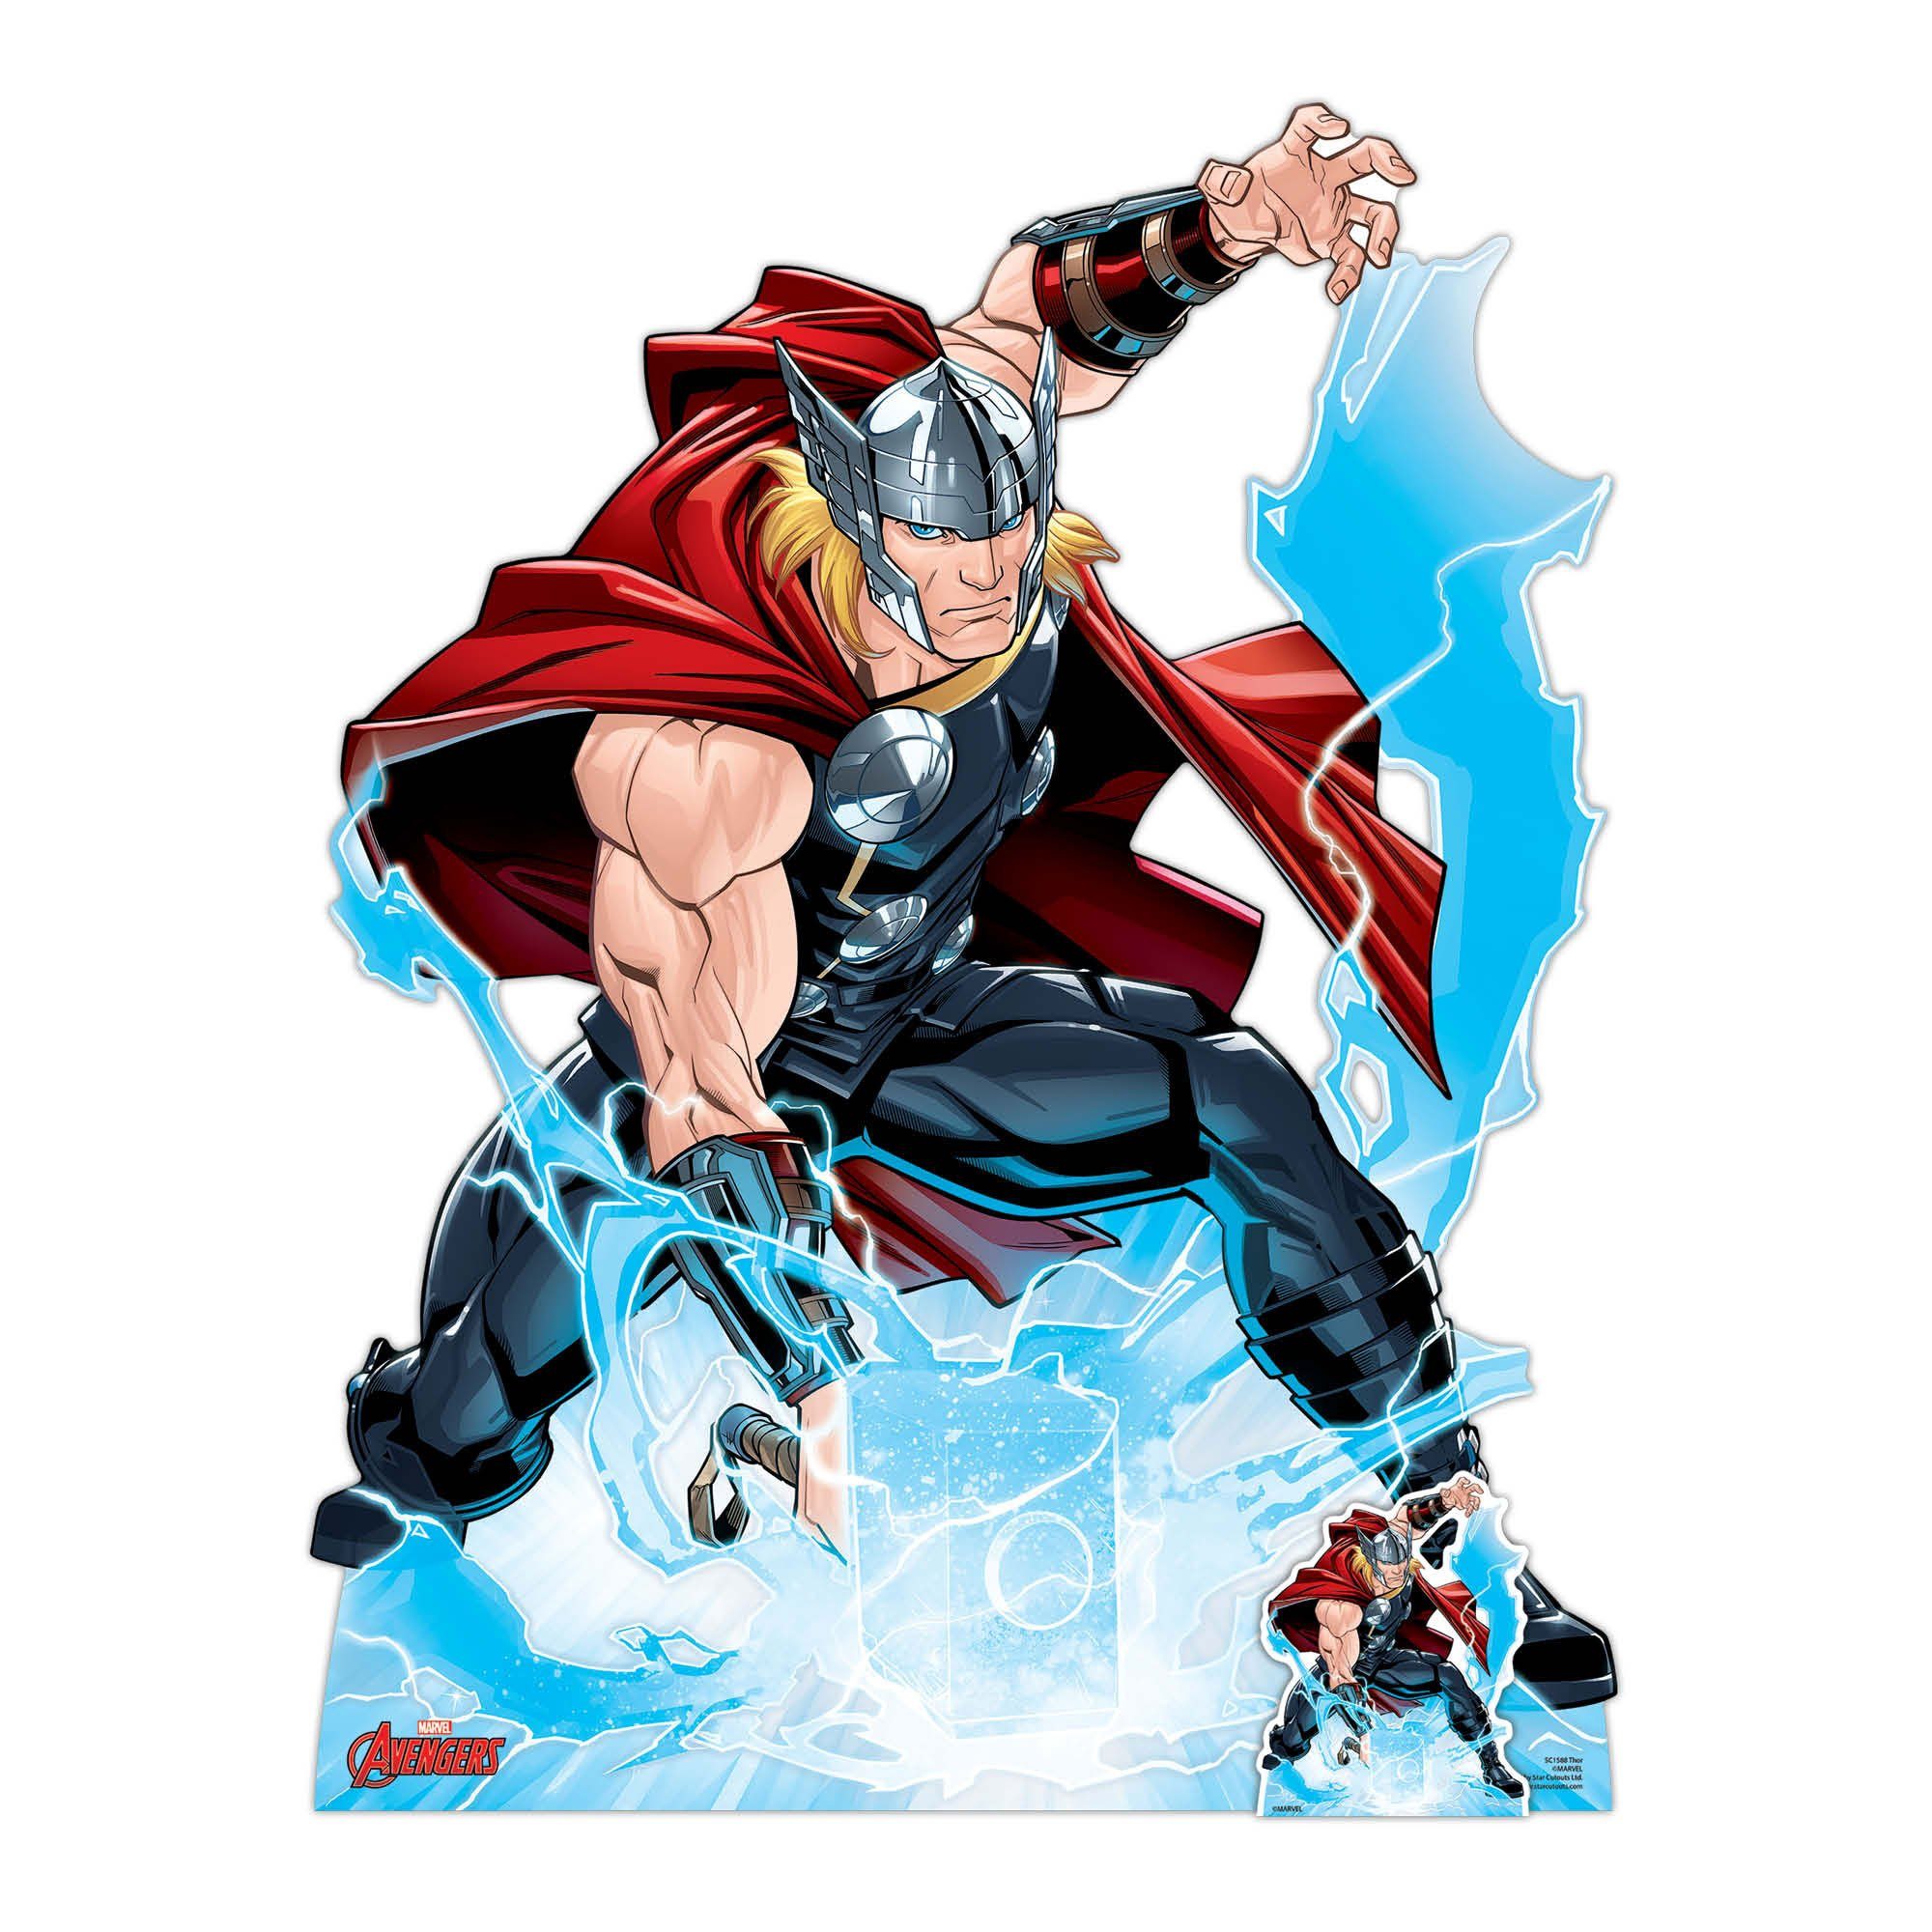 empireposter Dekofigur Thor - Call the Storm - Pappaufsteller Standy - 102x133 cm